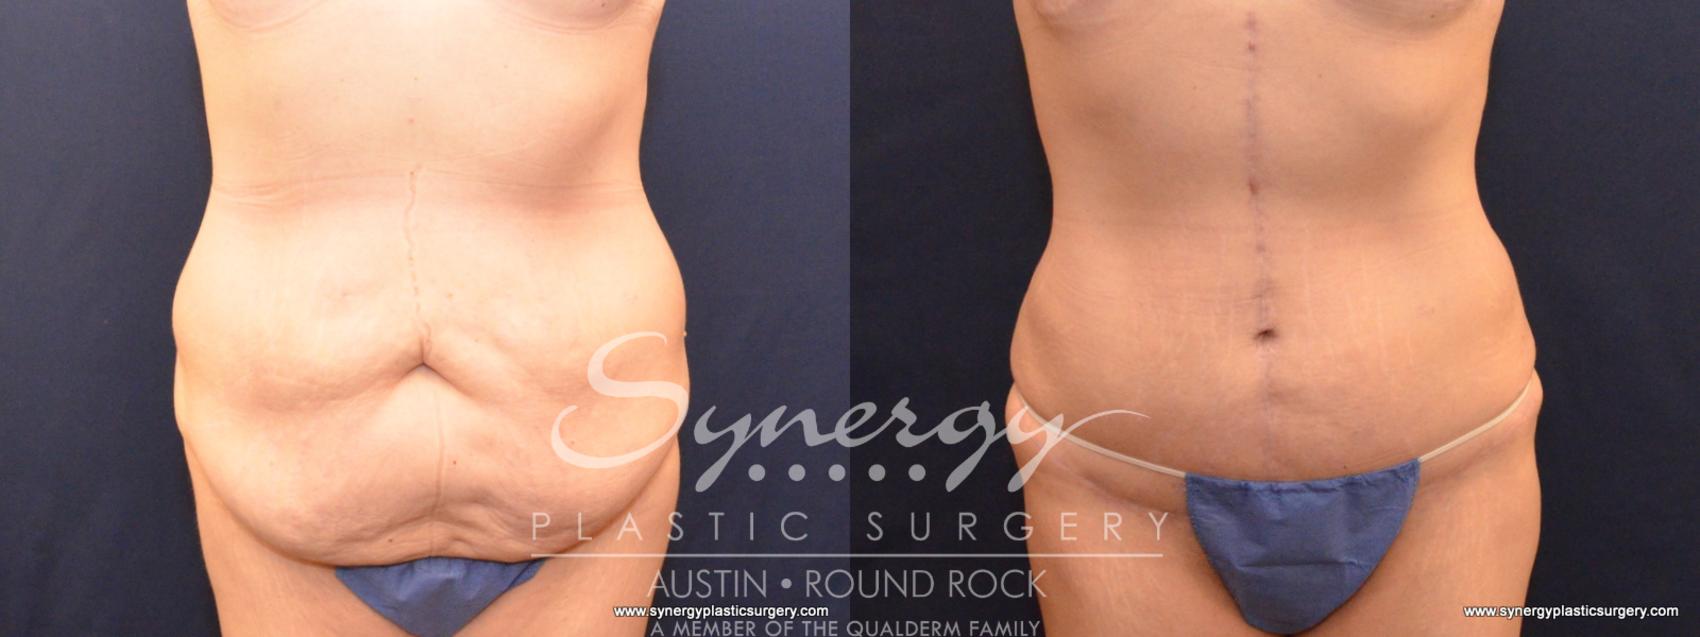 Before & After Fleur-de-Lis Tummy Tuck Case 570 View #1 View in Austin, TX